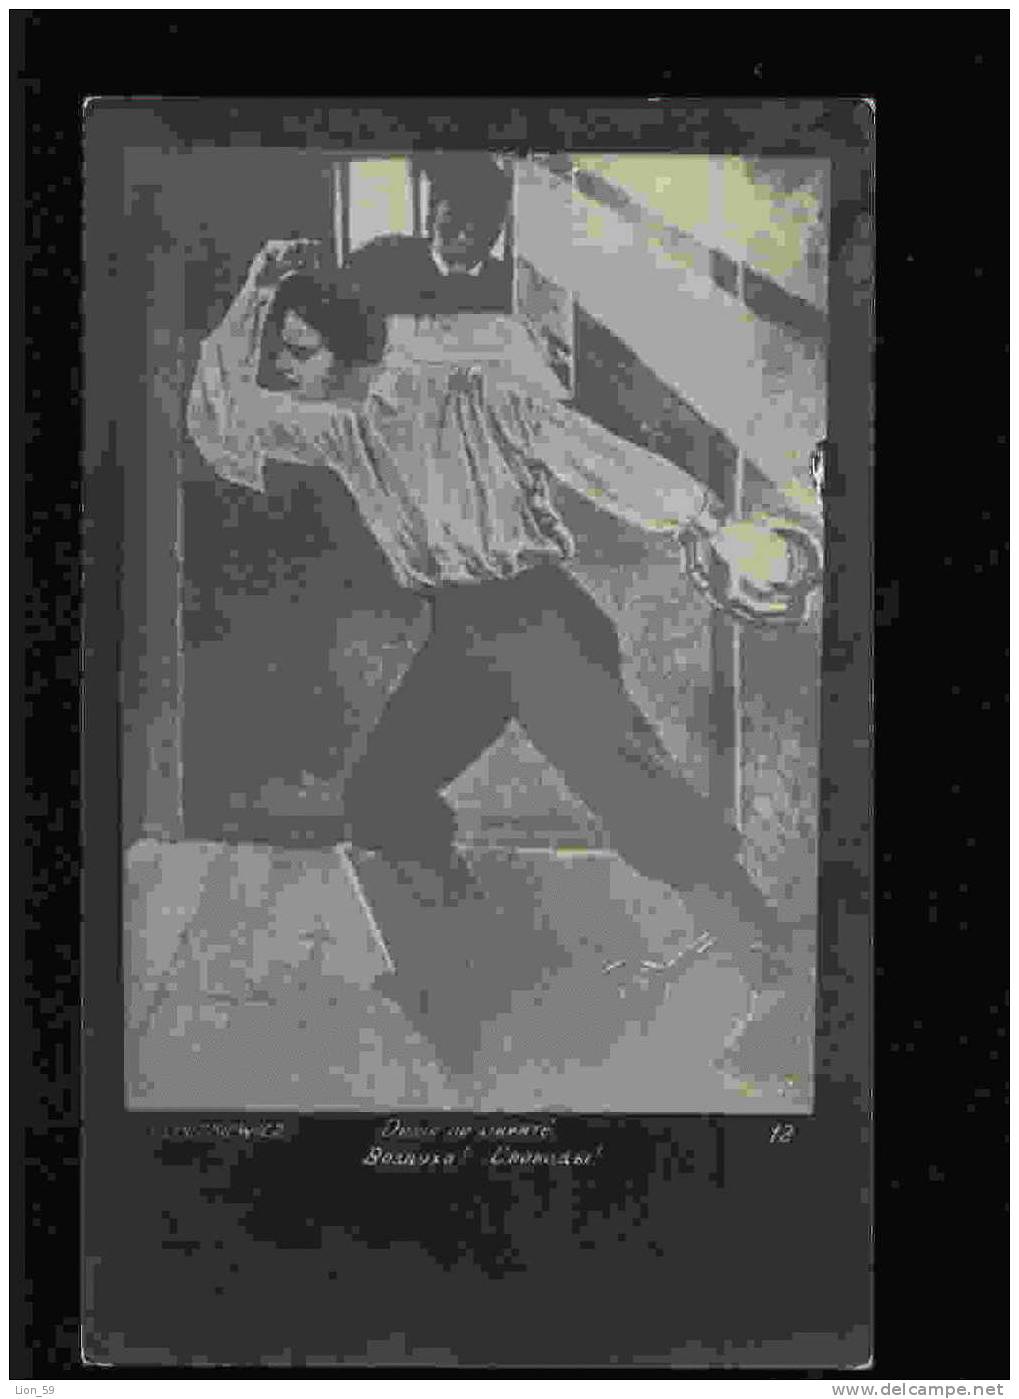 Art CLECZHIEWICZ - DESIRE OF FREEDOM , MAN PRISONER Pc Publisher:RUSSIA Series - # 12 /1910s - Presidio & Presidiarios